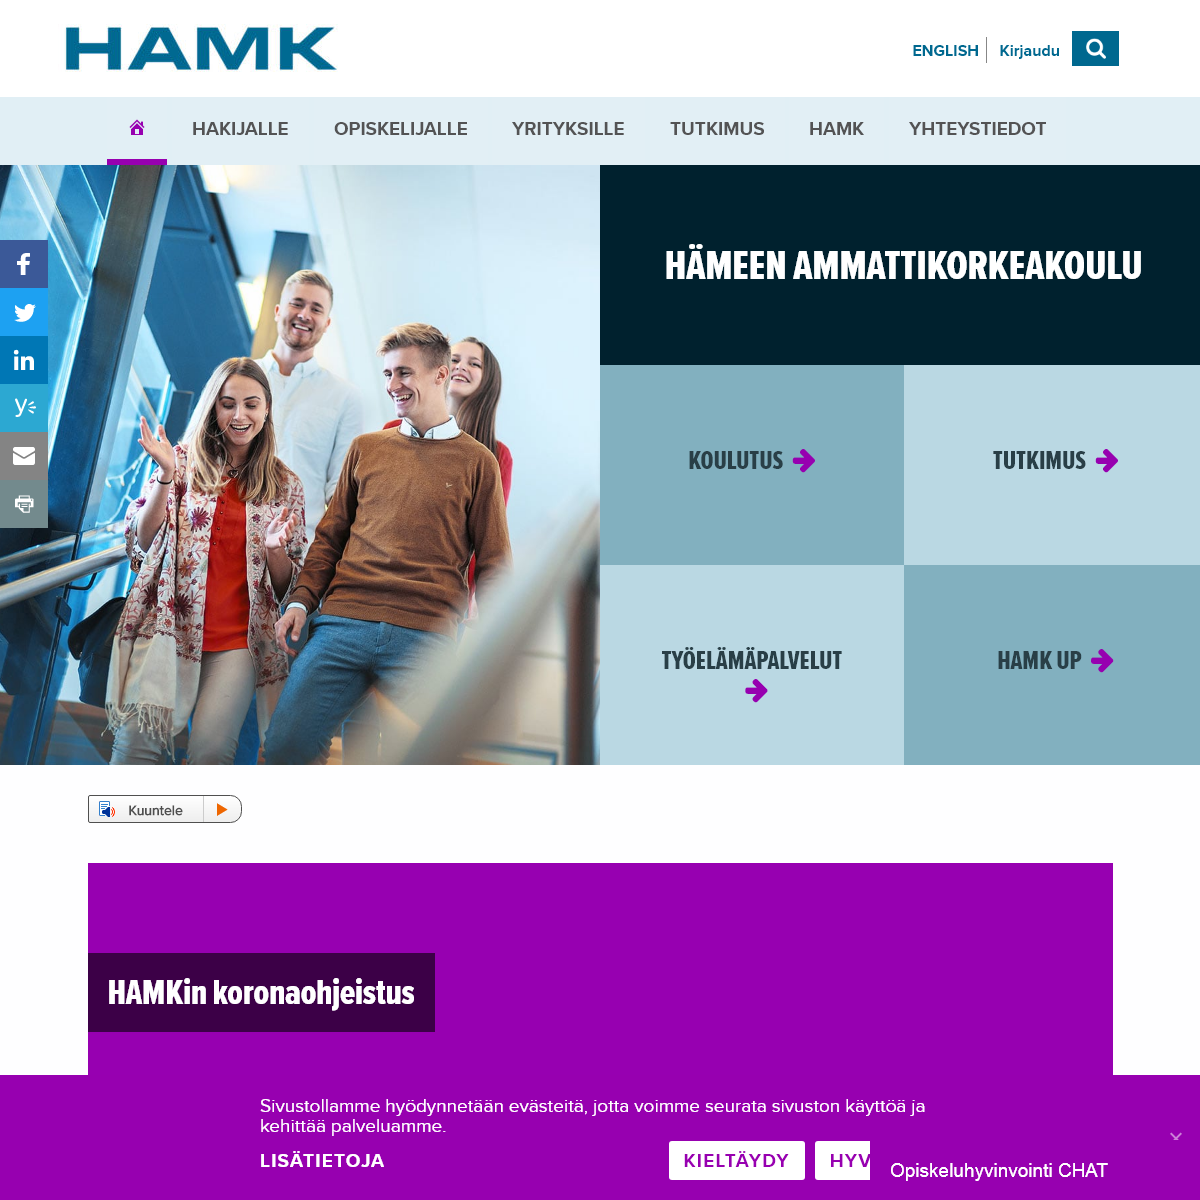 A complete backup of hamk.fi